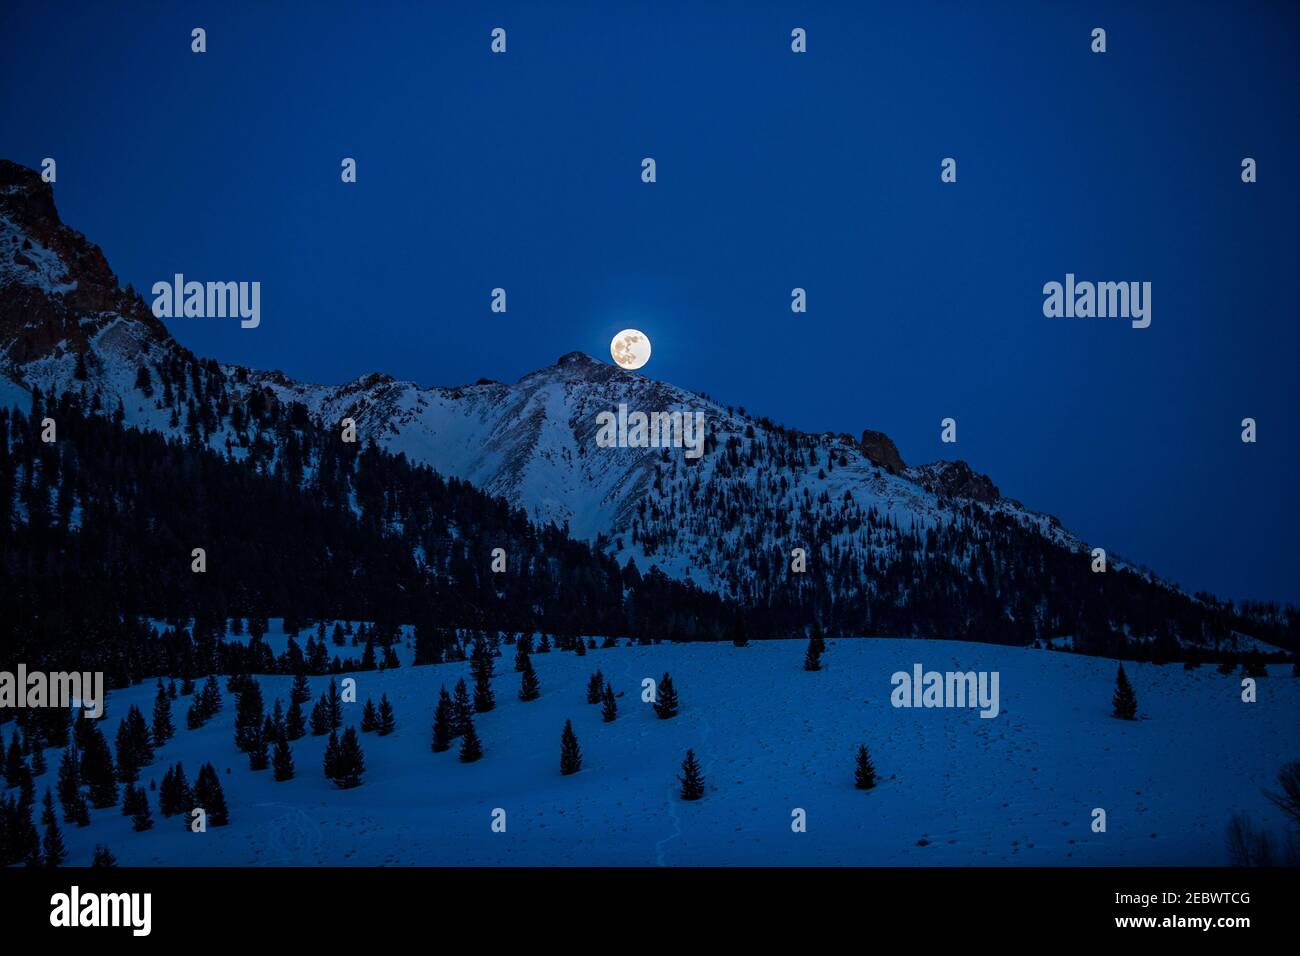 USA, Idaho, Sun Valley, Full moon rising over Boulder Mountains in winter night Stock Photo